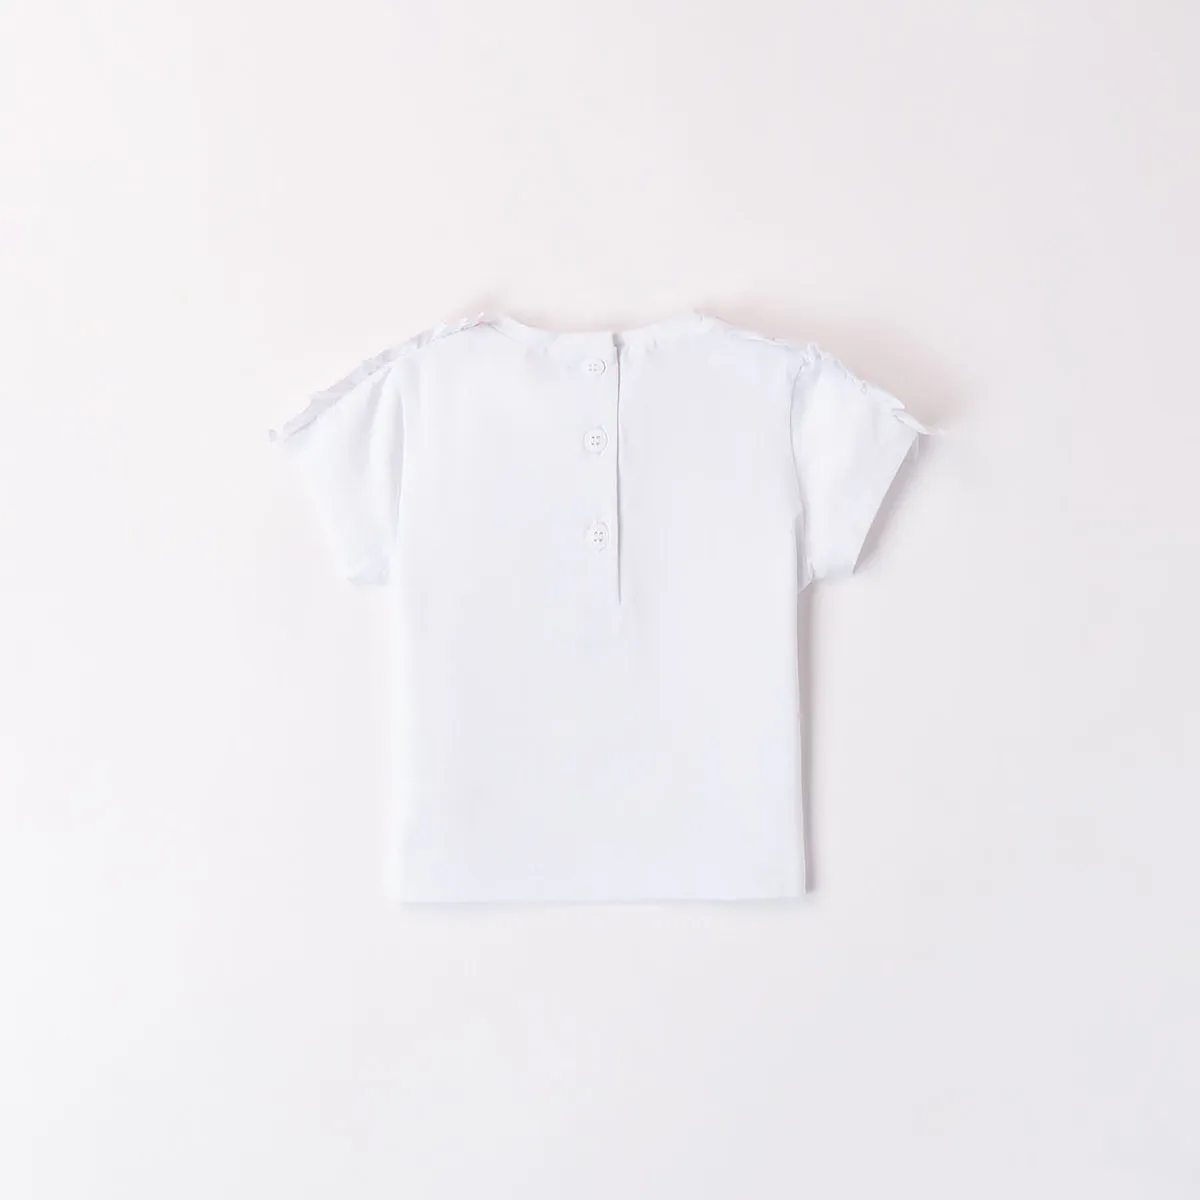 Minibanda majica, 56-92